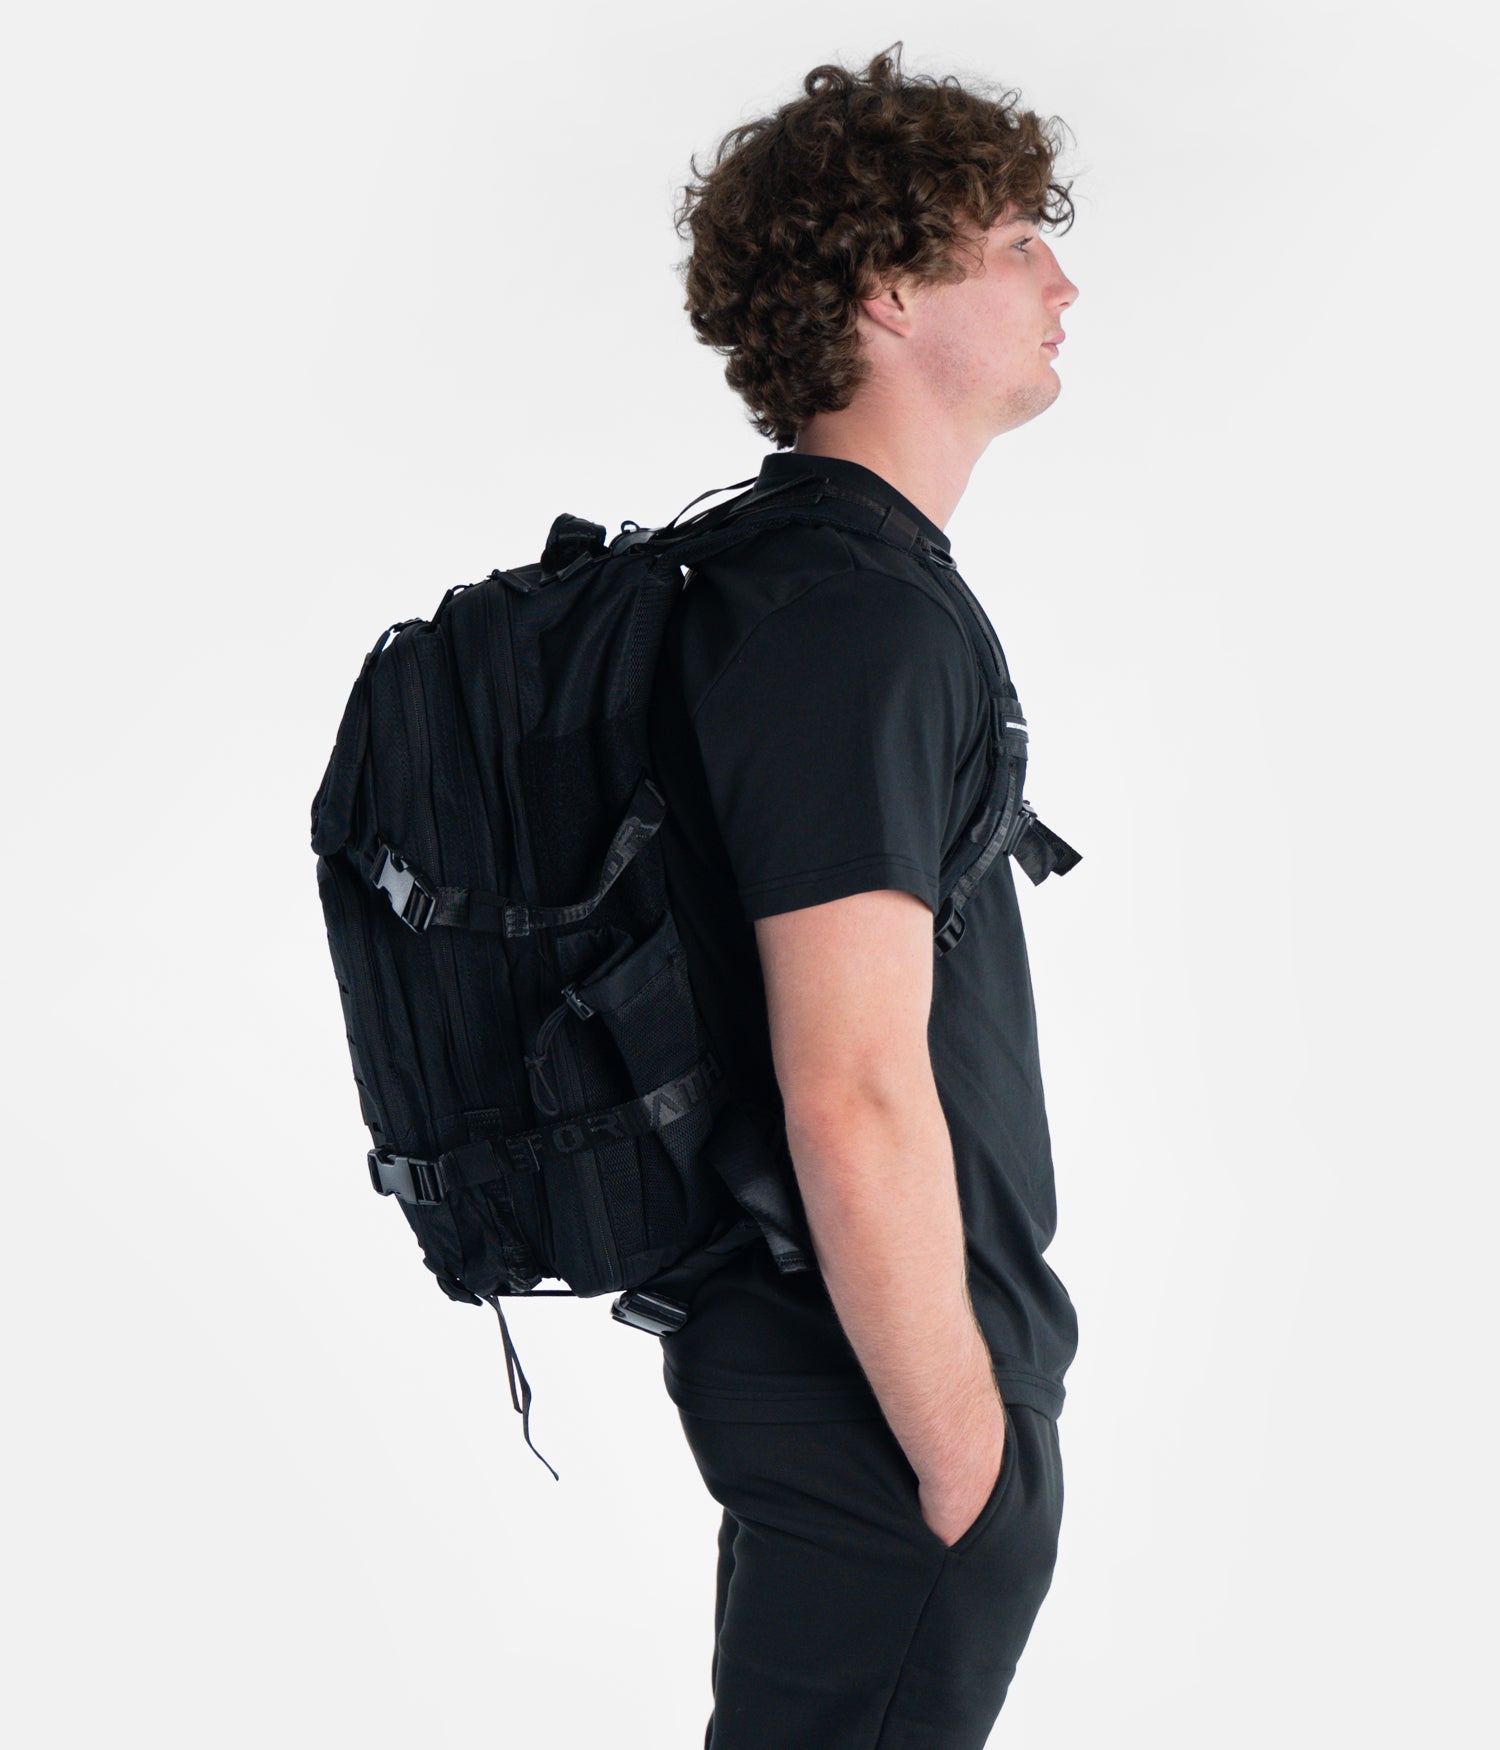 Progress X Built for Athletes- Large Backpack